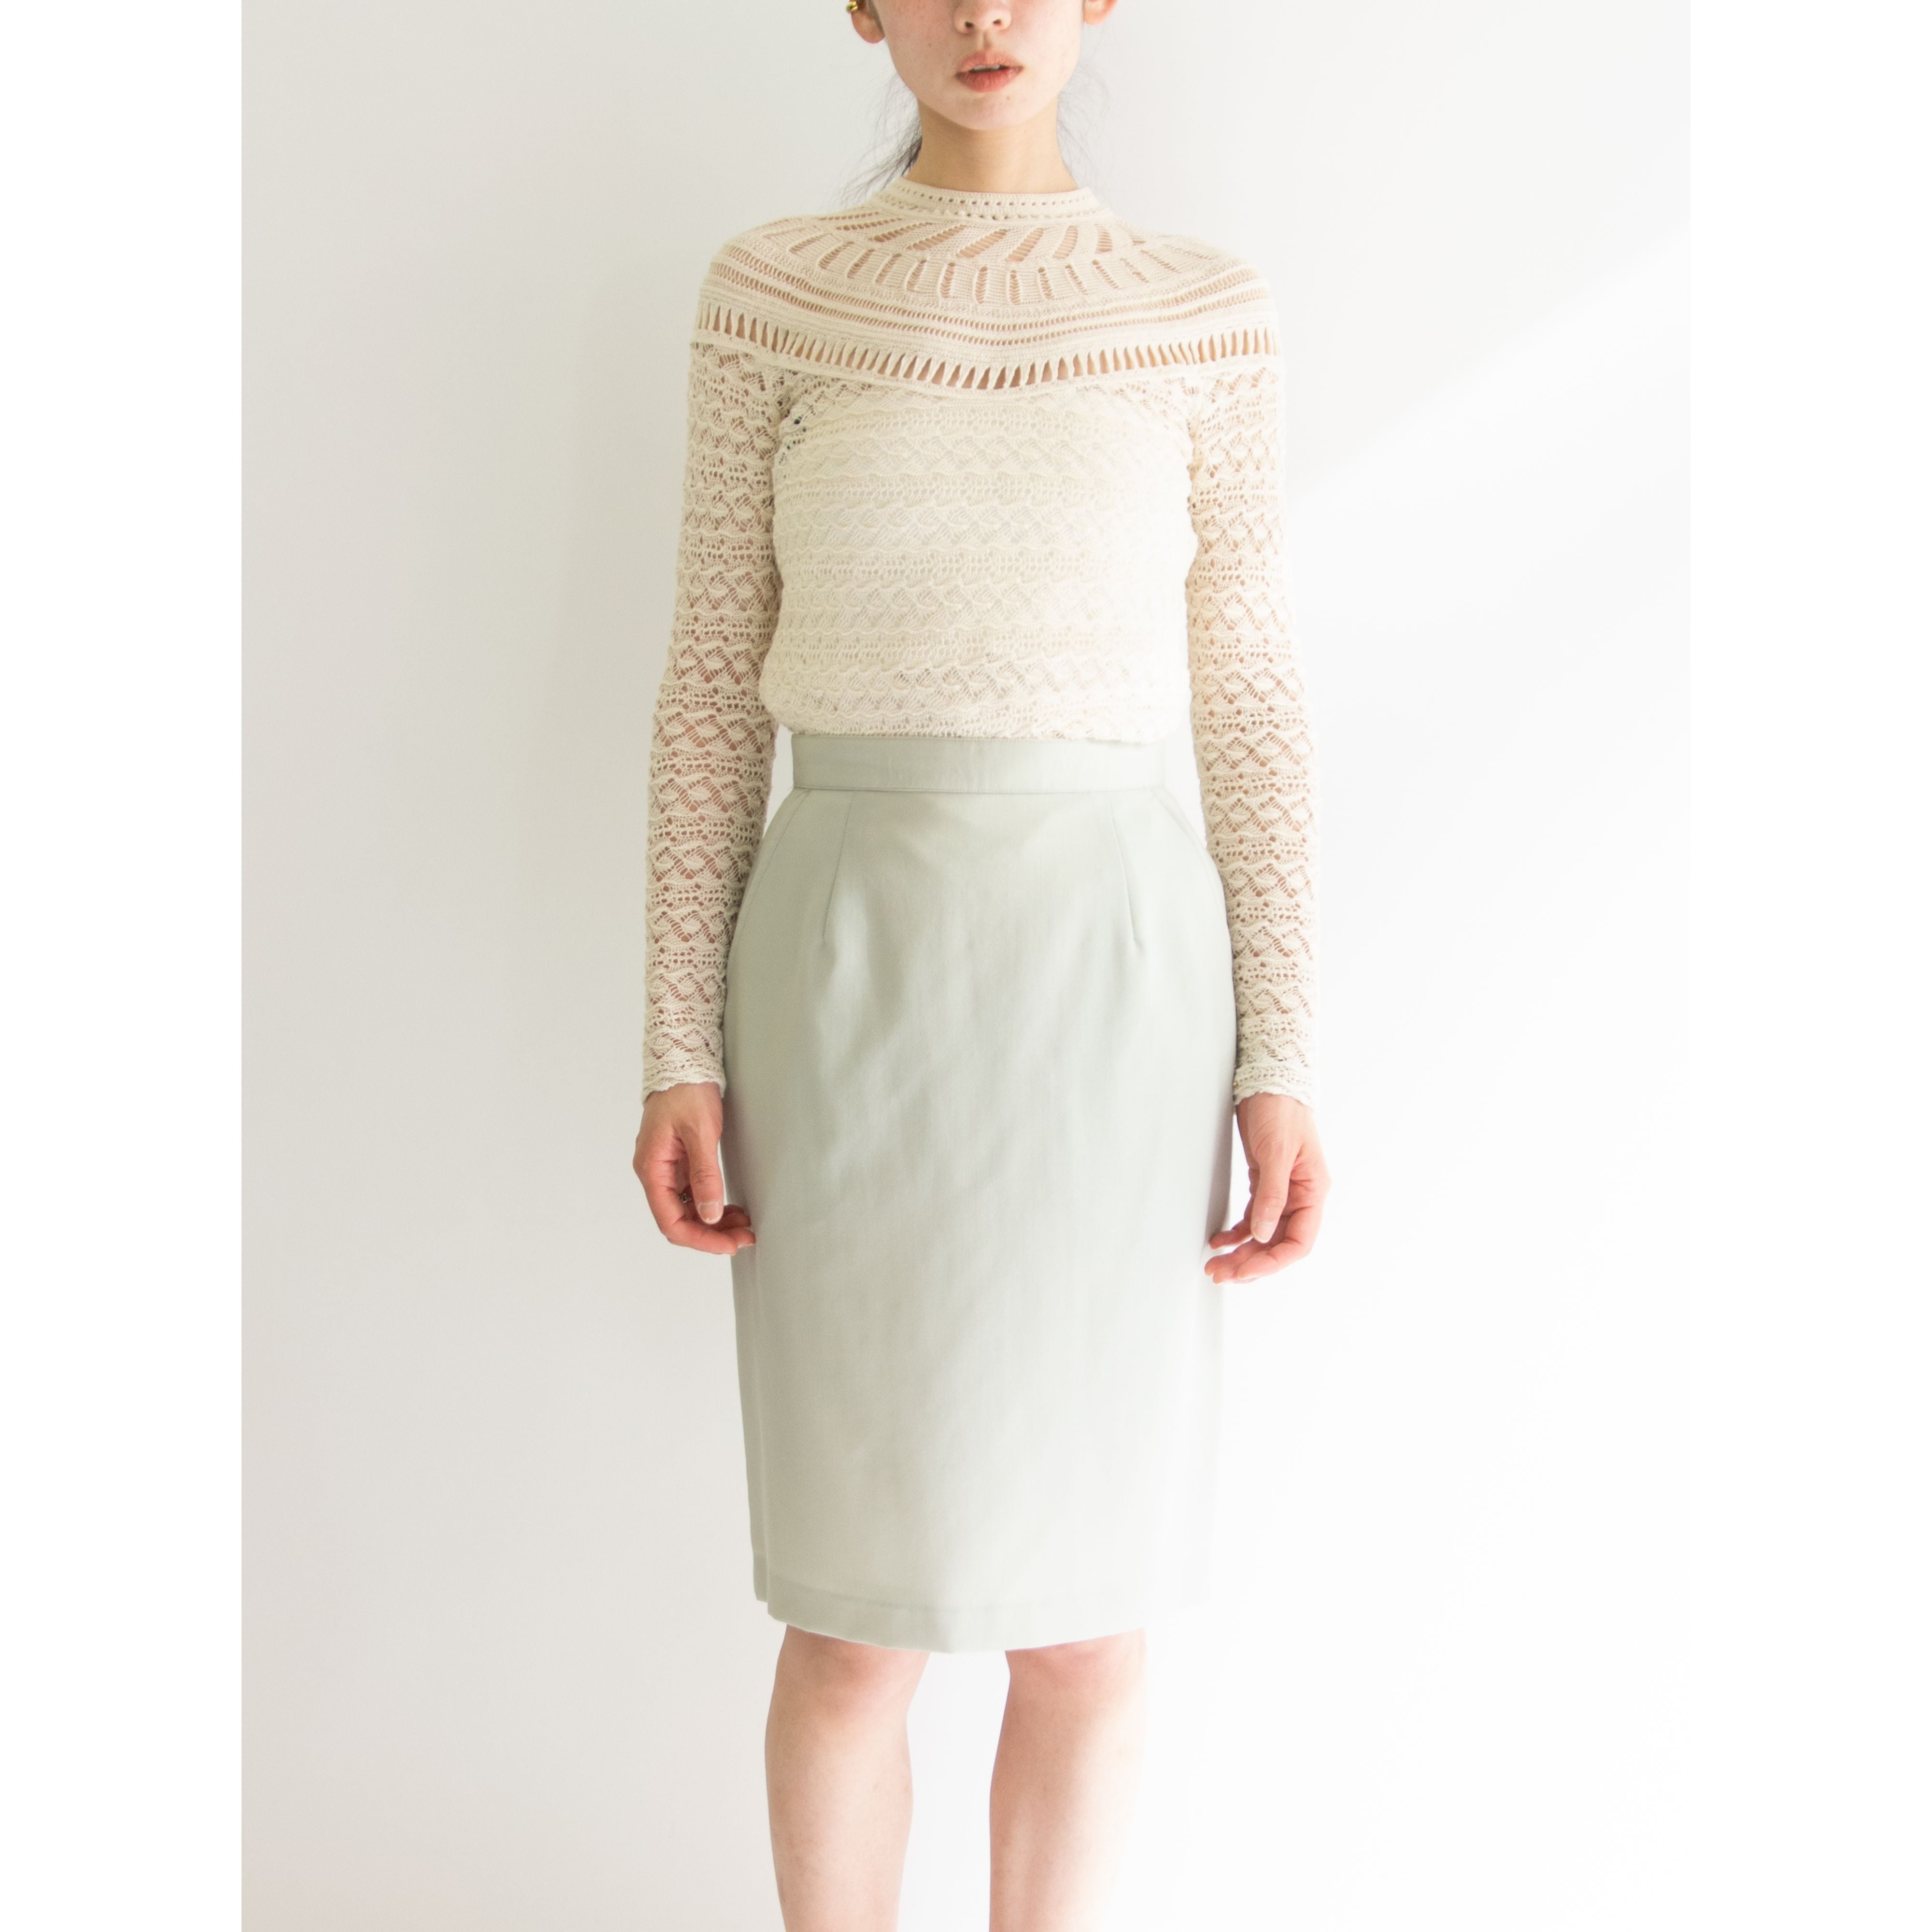 I.S. ISSEY MIYAKE】Made in Japan 80's 100% Wool Tuck Skirt